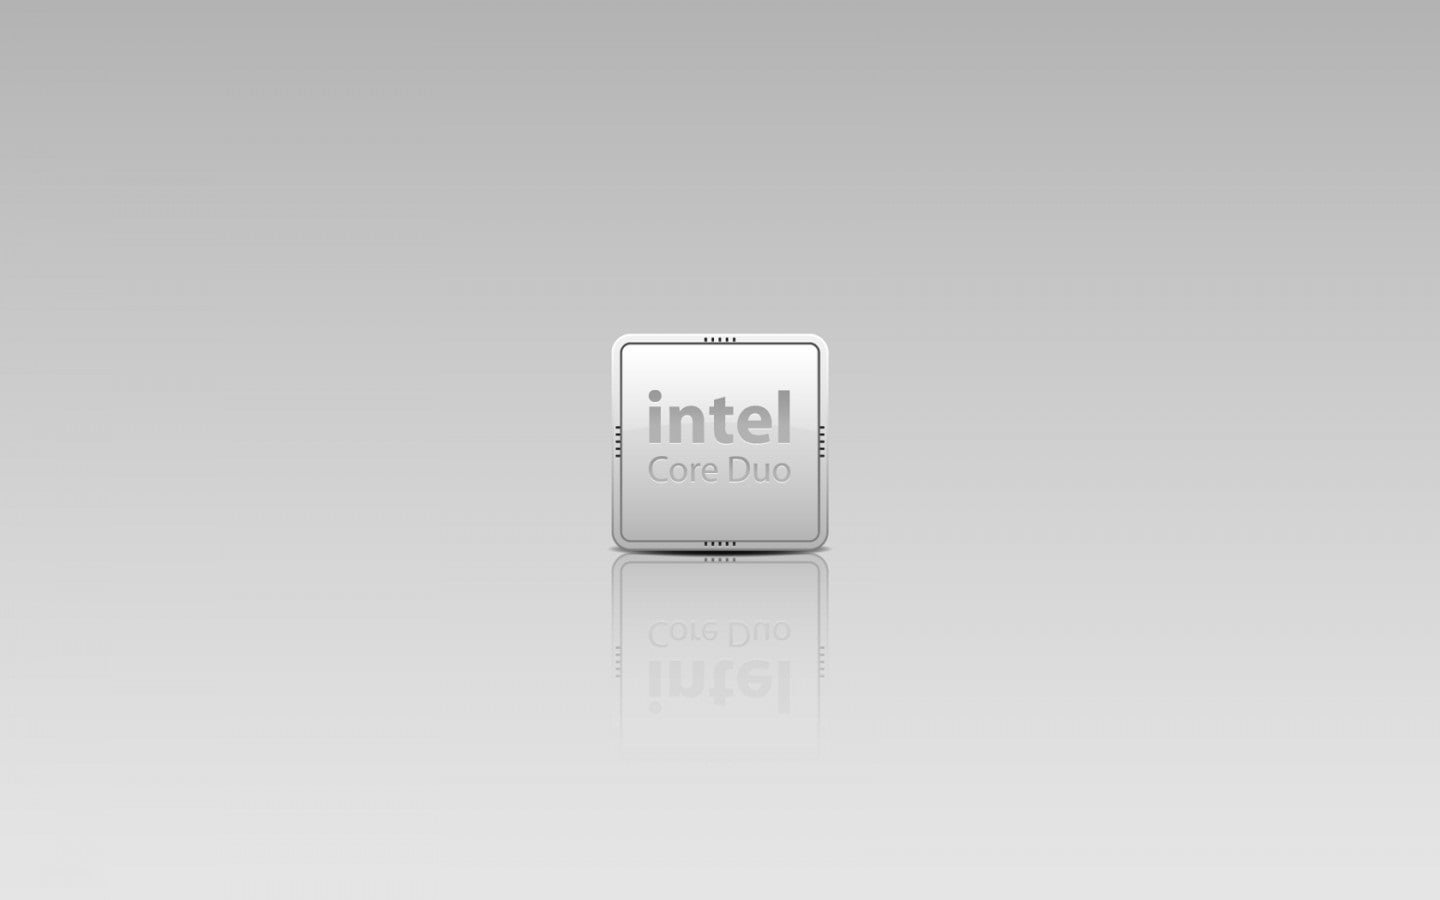 Intel Core Duo, Intel Core Duo logo, Computers, white, text, communication